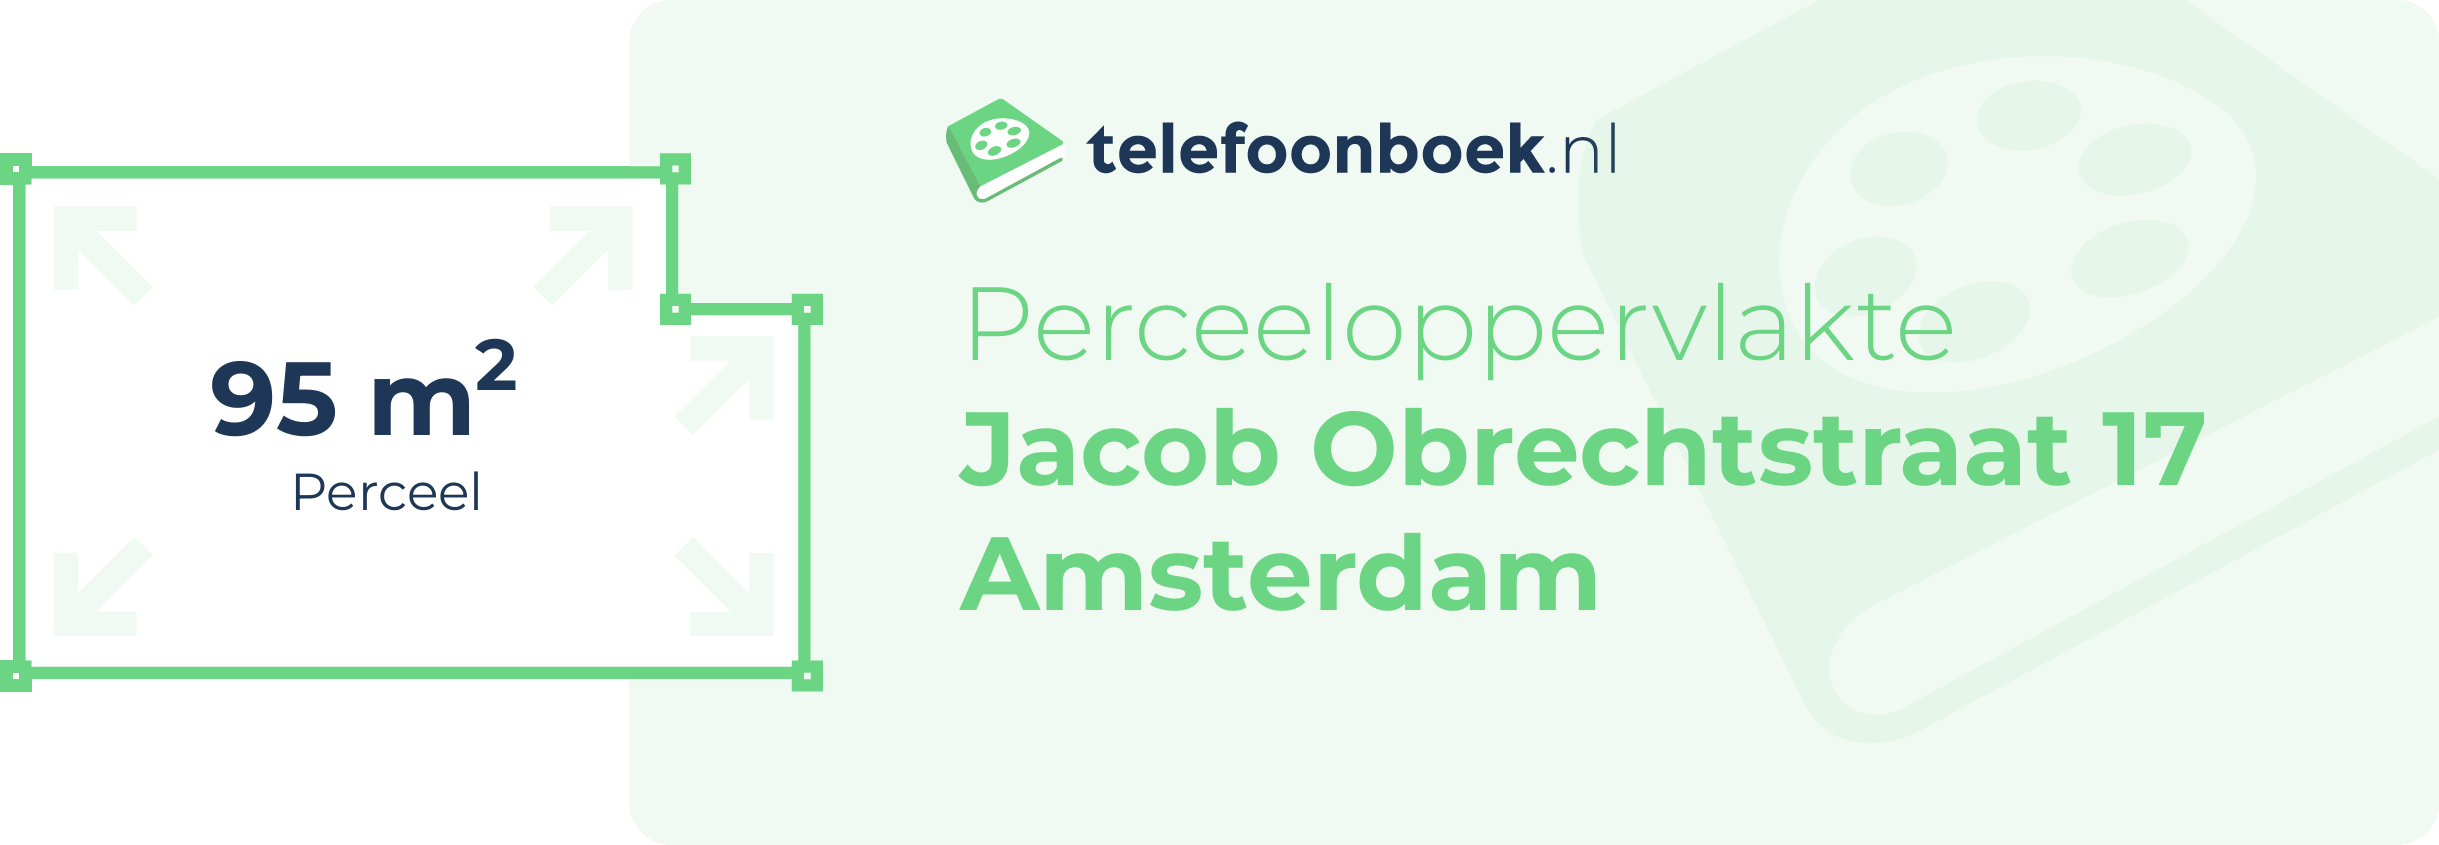 Perceeloppervlakte Jacob Obrechtstraat 17 Amsterdam